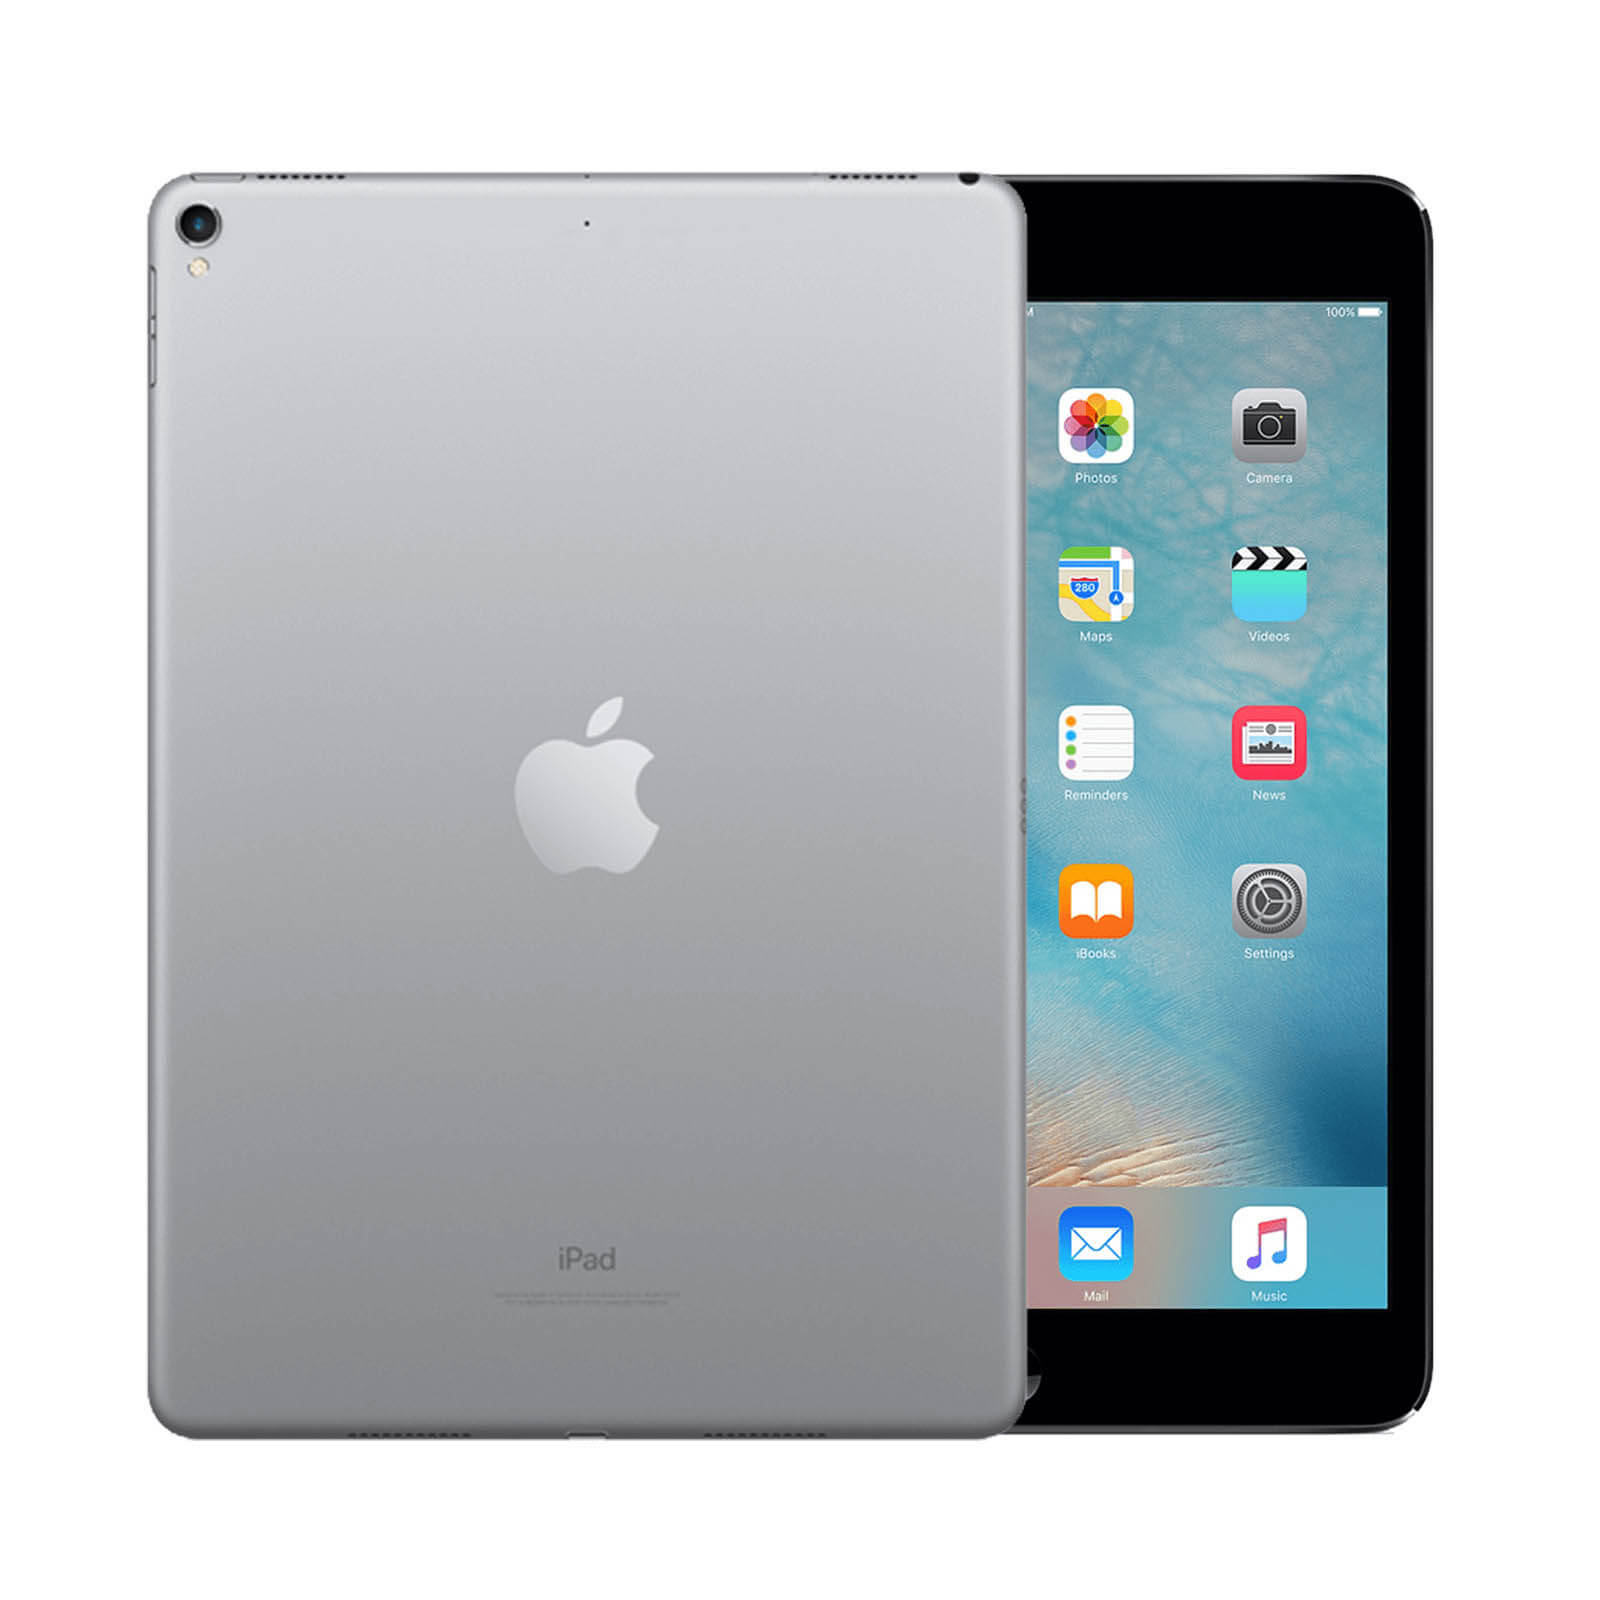 iPad Pro 9.7 Inch 256GB Space Grey Very Good - WiFi